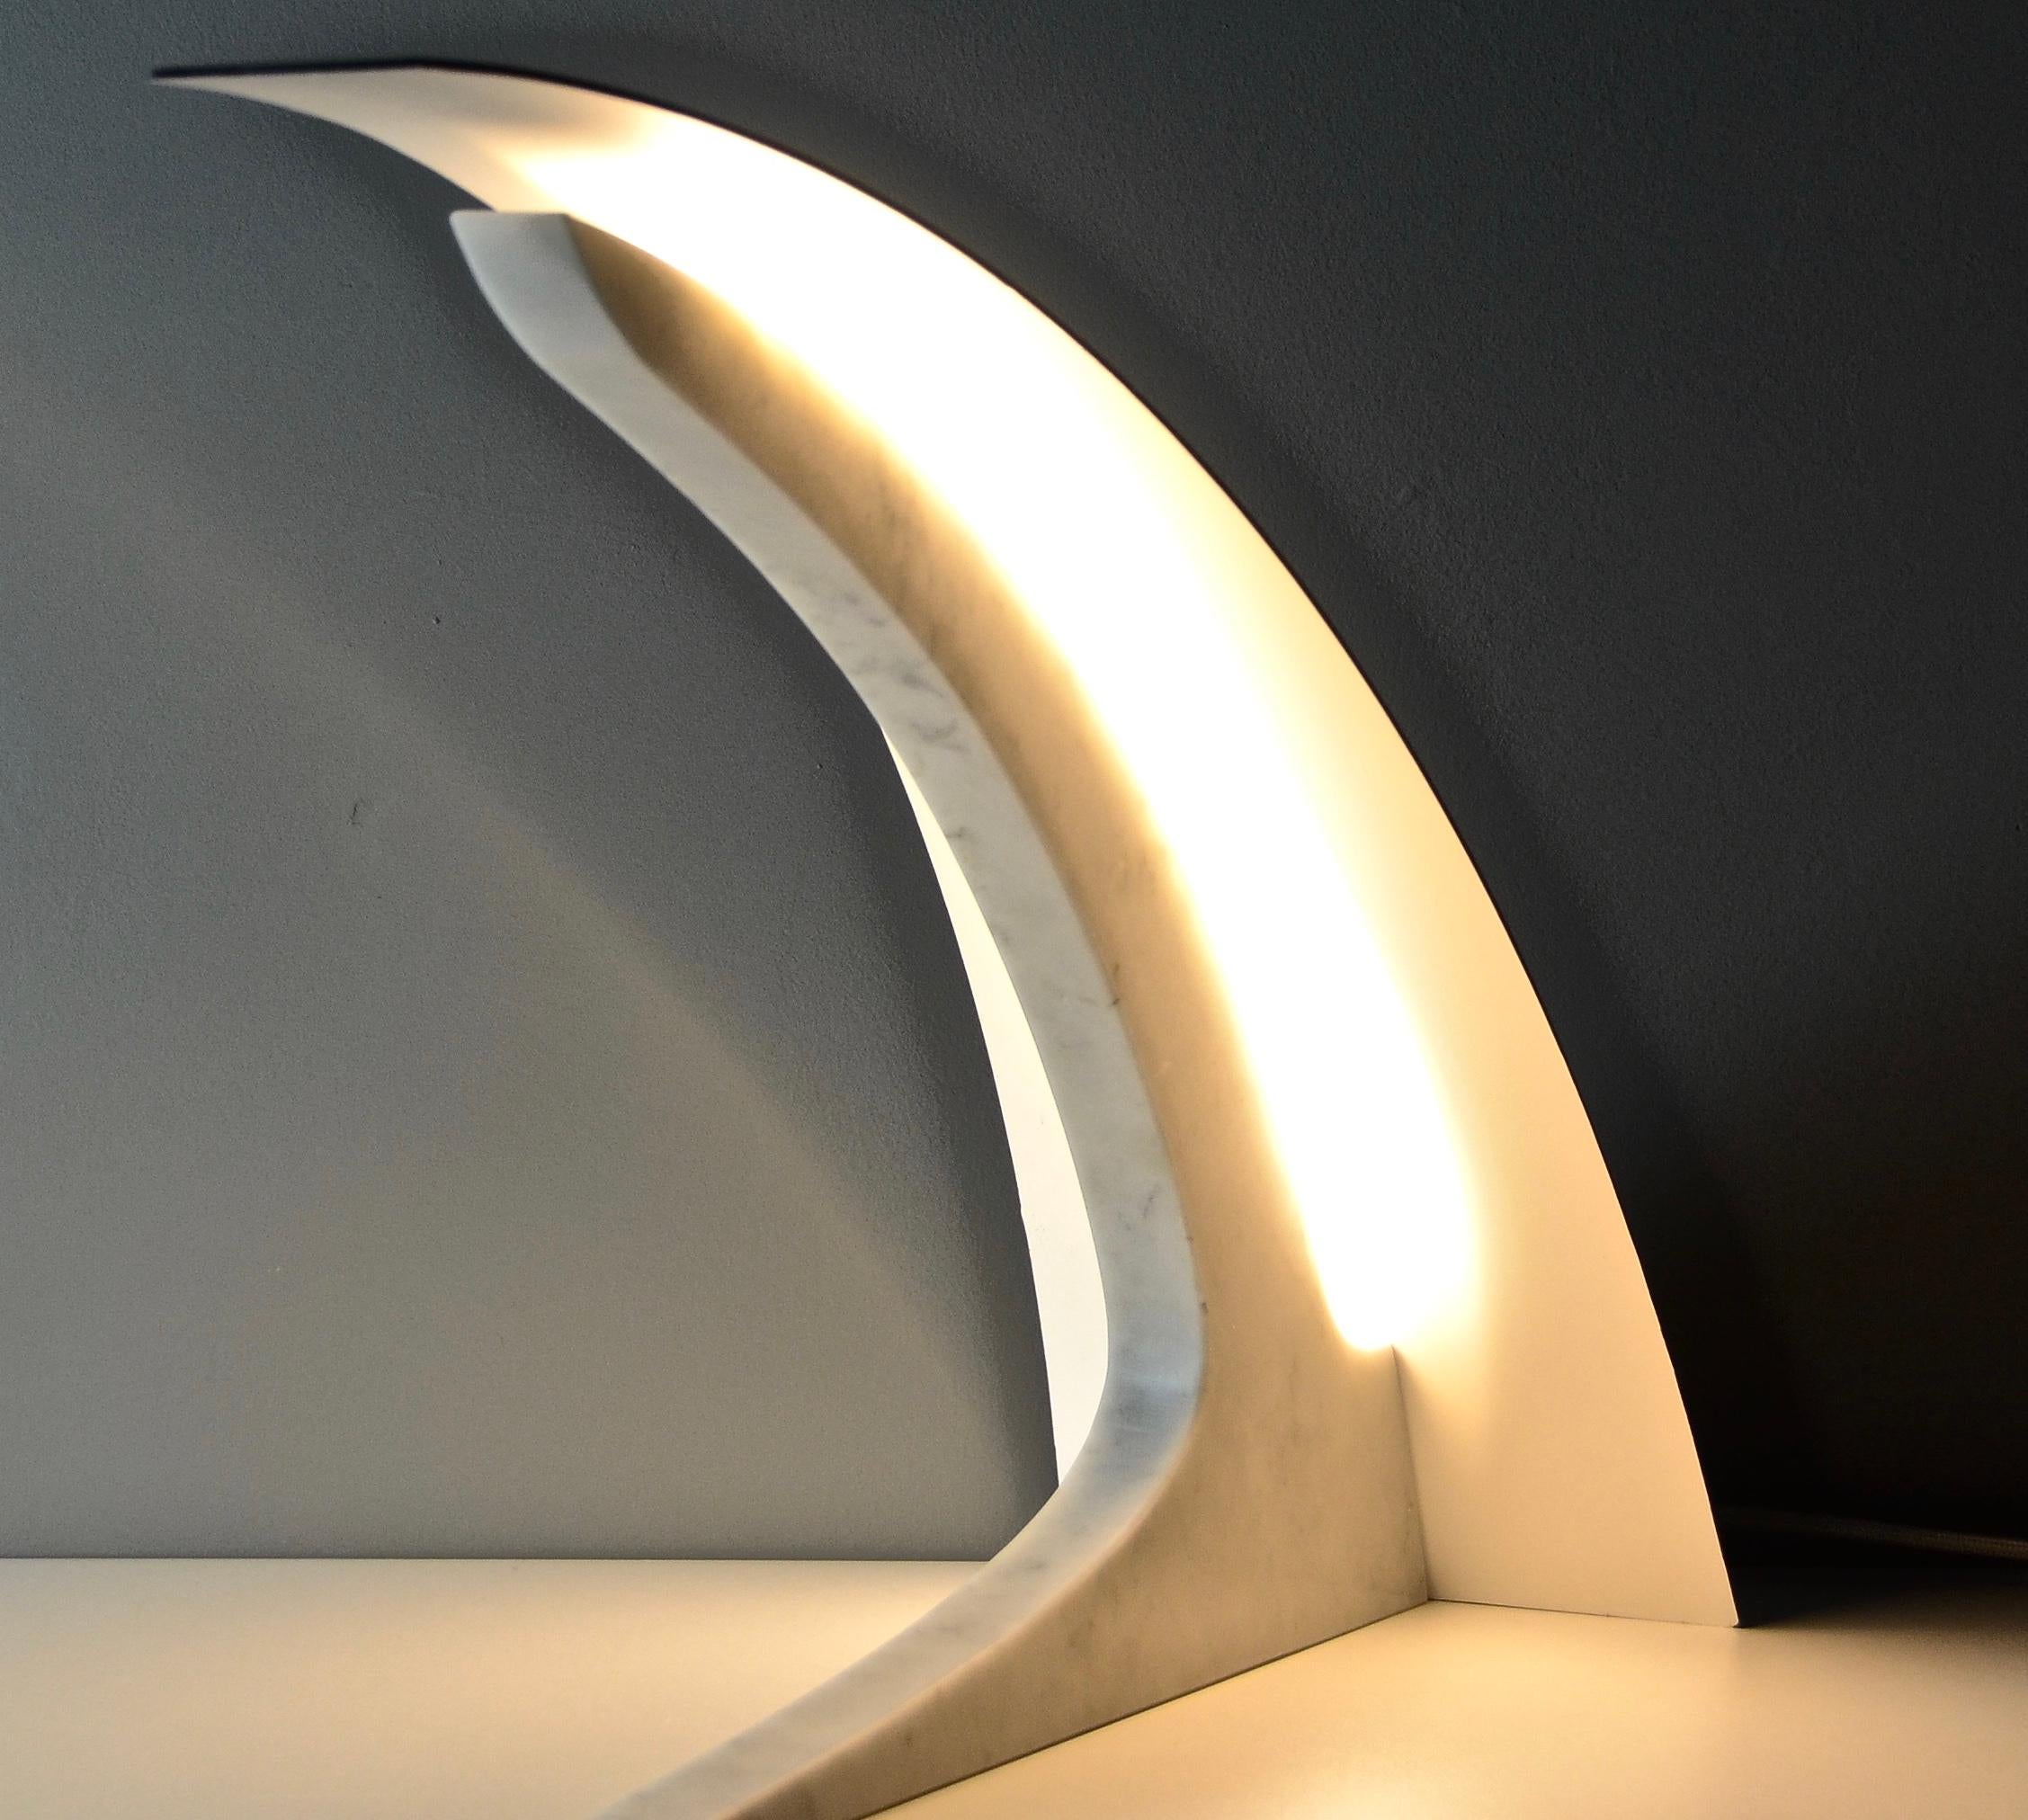 Carrara Marble S. Rubertelli for Matlight Italian White Marble and Bronzed Aluminum Table Lamp